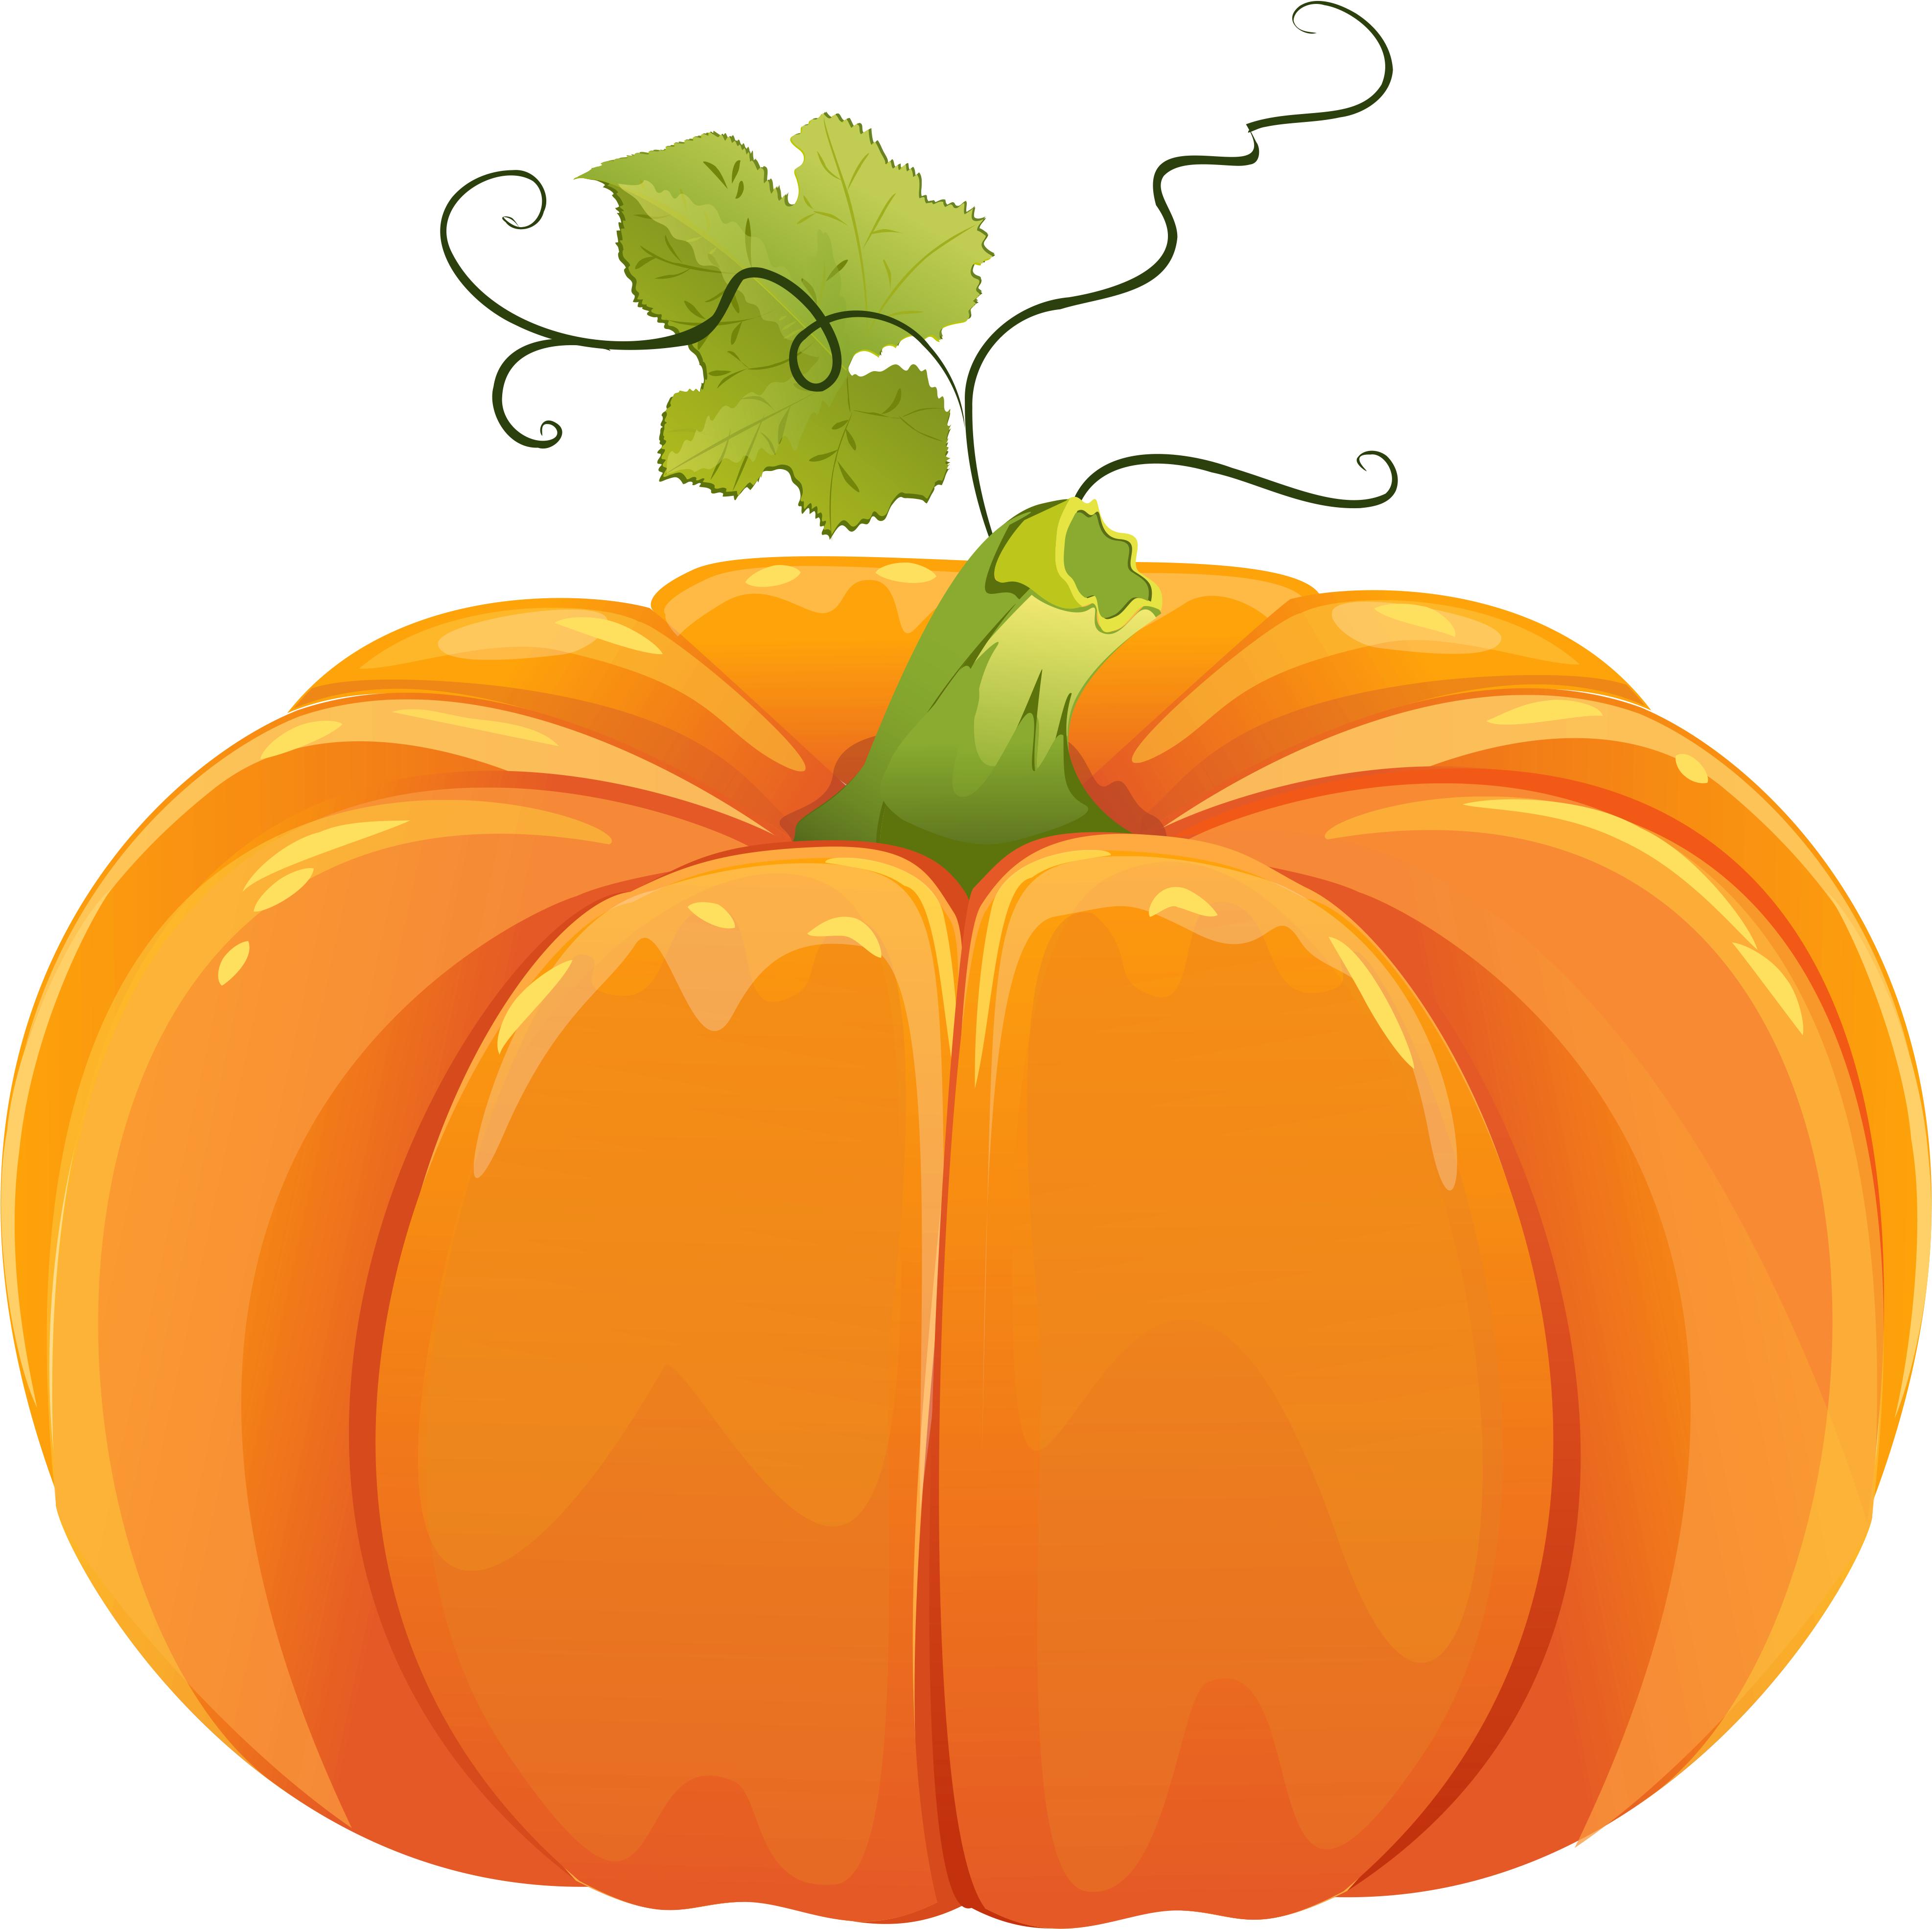 Vibrant Orange Pumpkin Illustration